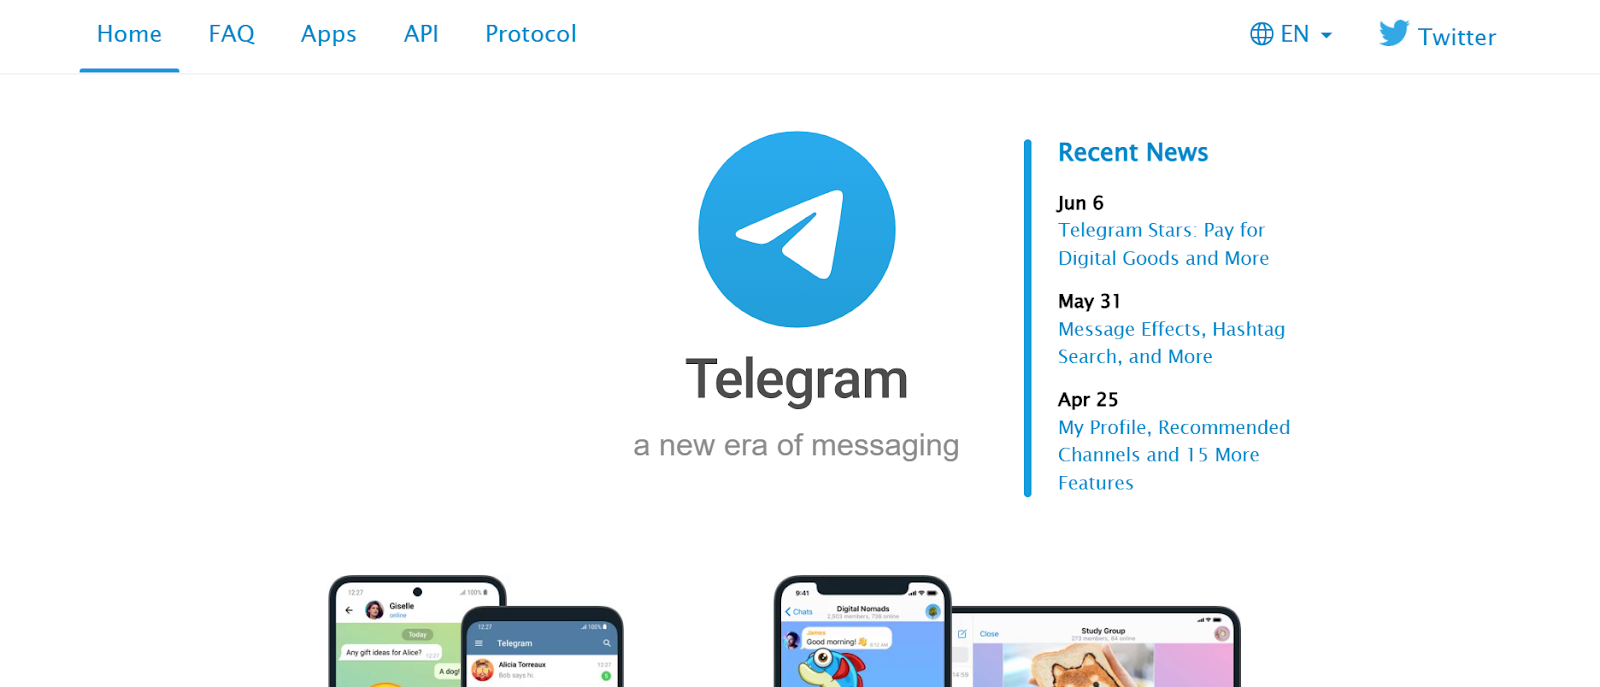 Telegram website snapshot highlighting the services it offers.